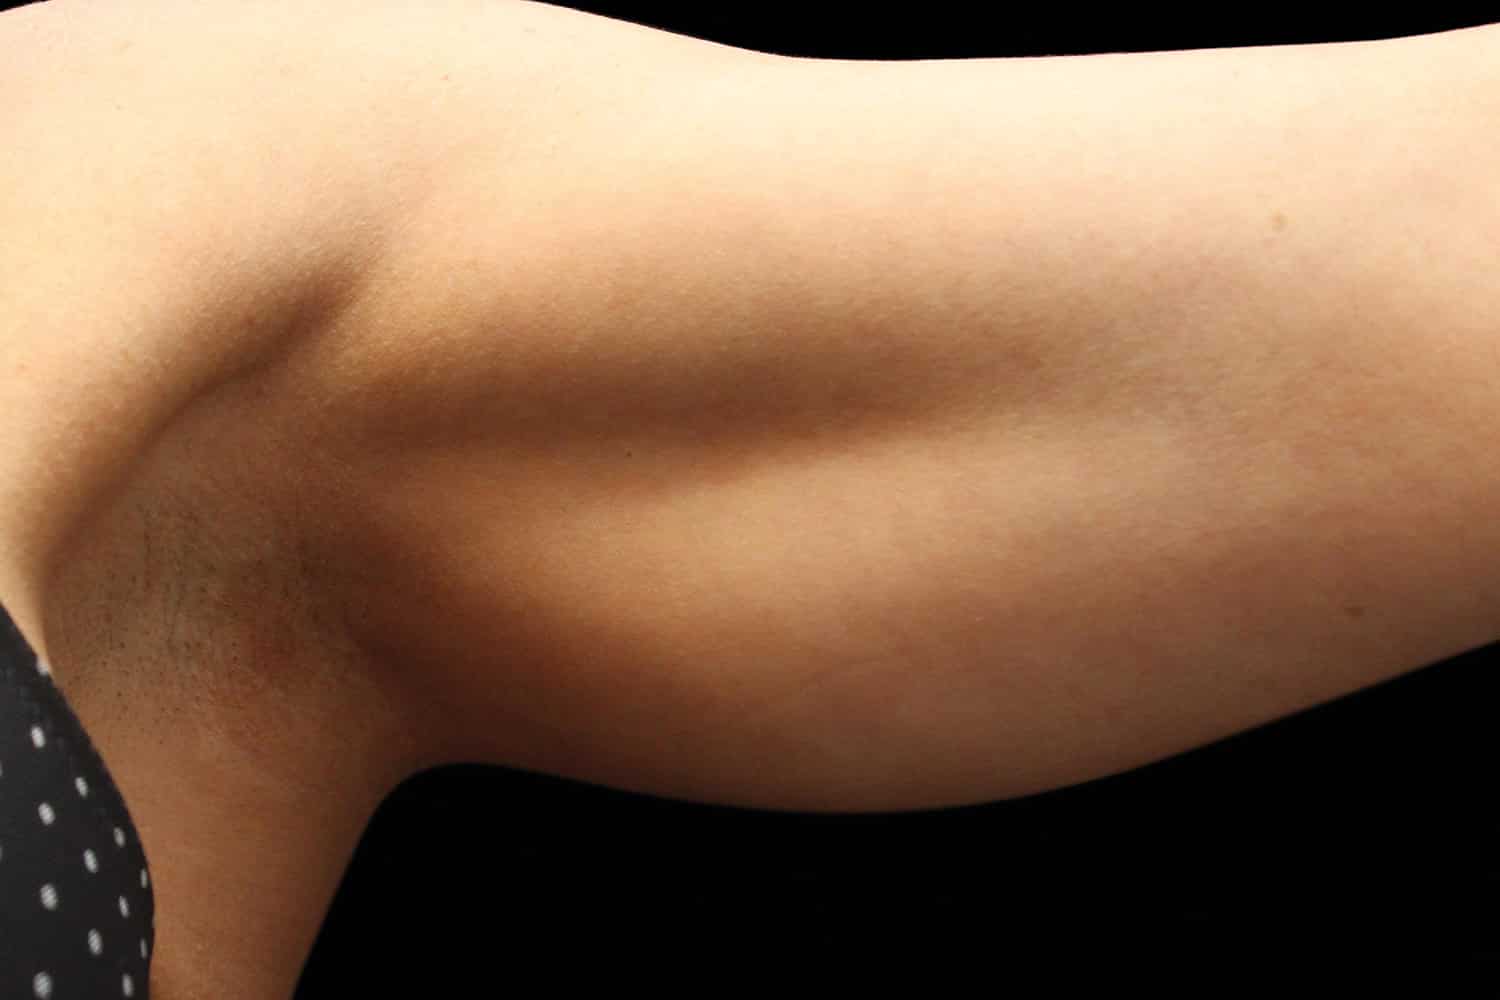 A person's arm after Exilis Ultra Treatment of Regeneris